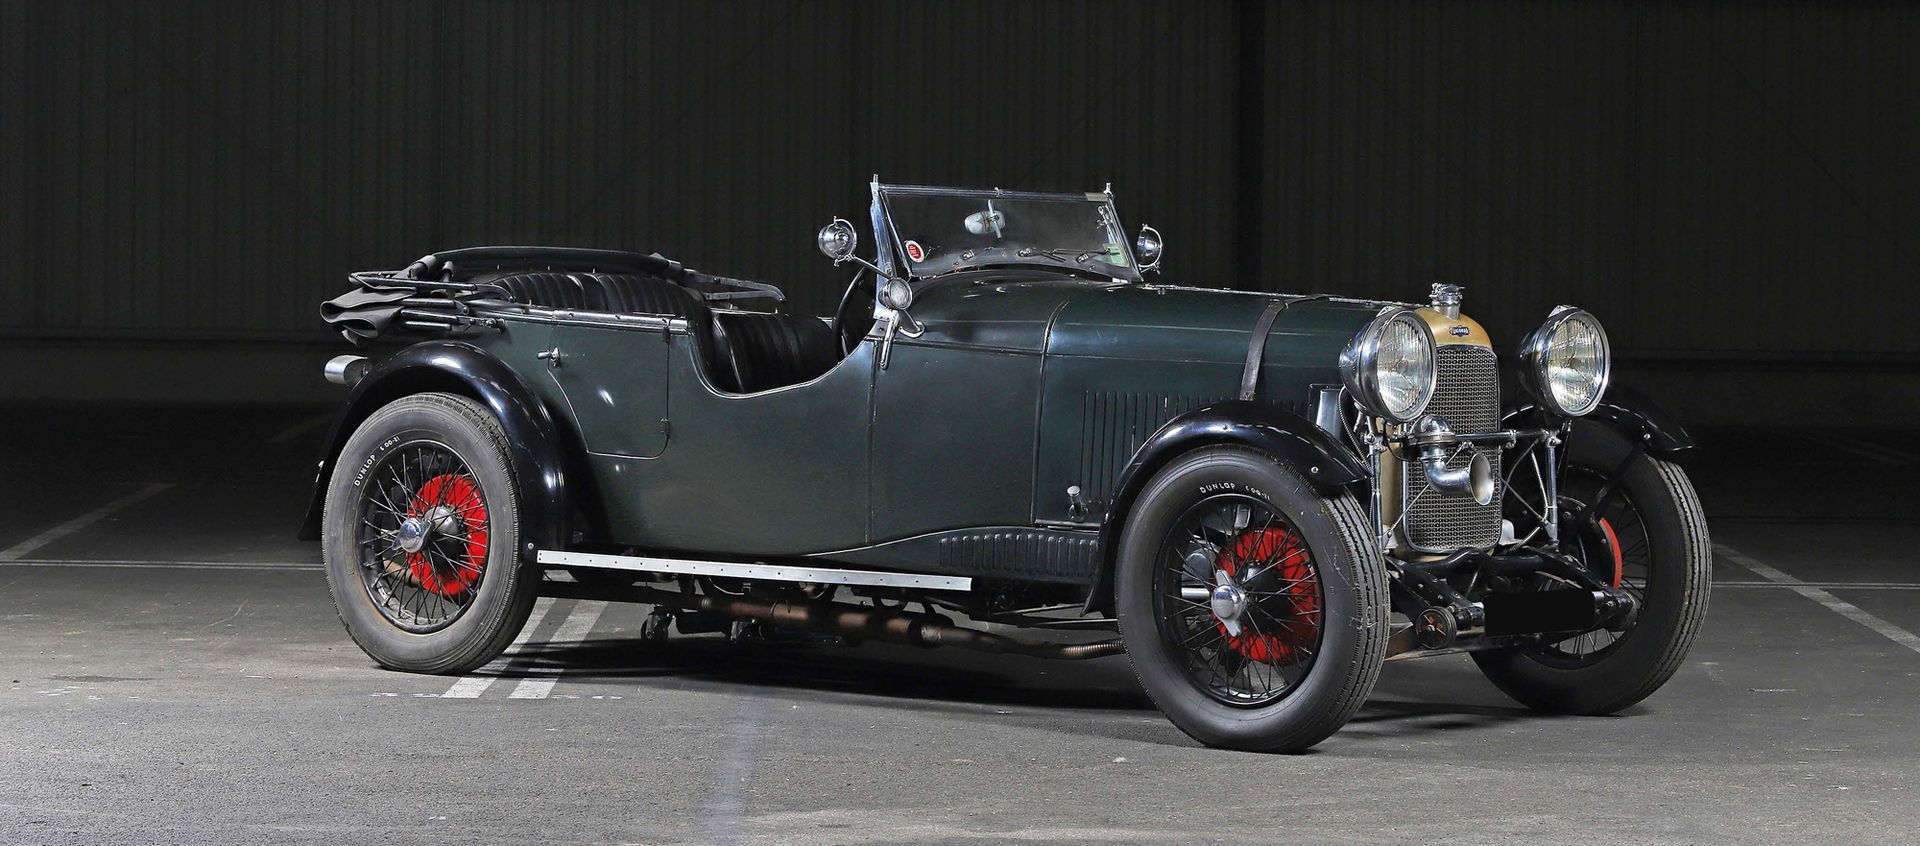 1929 LAGONDA 2 Litre Low chassis 
毫无保留 



上世纪20年代的标志性跑车

原有的发动机

漂亮的铜锈



法国注册
&hellip;